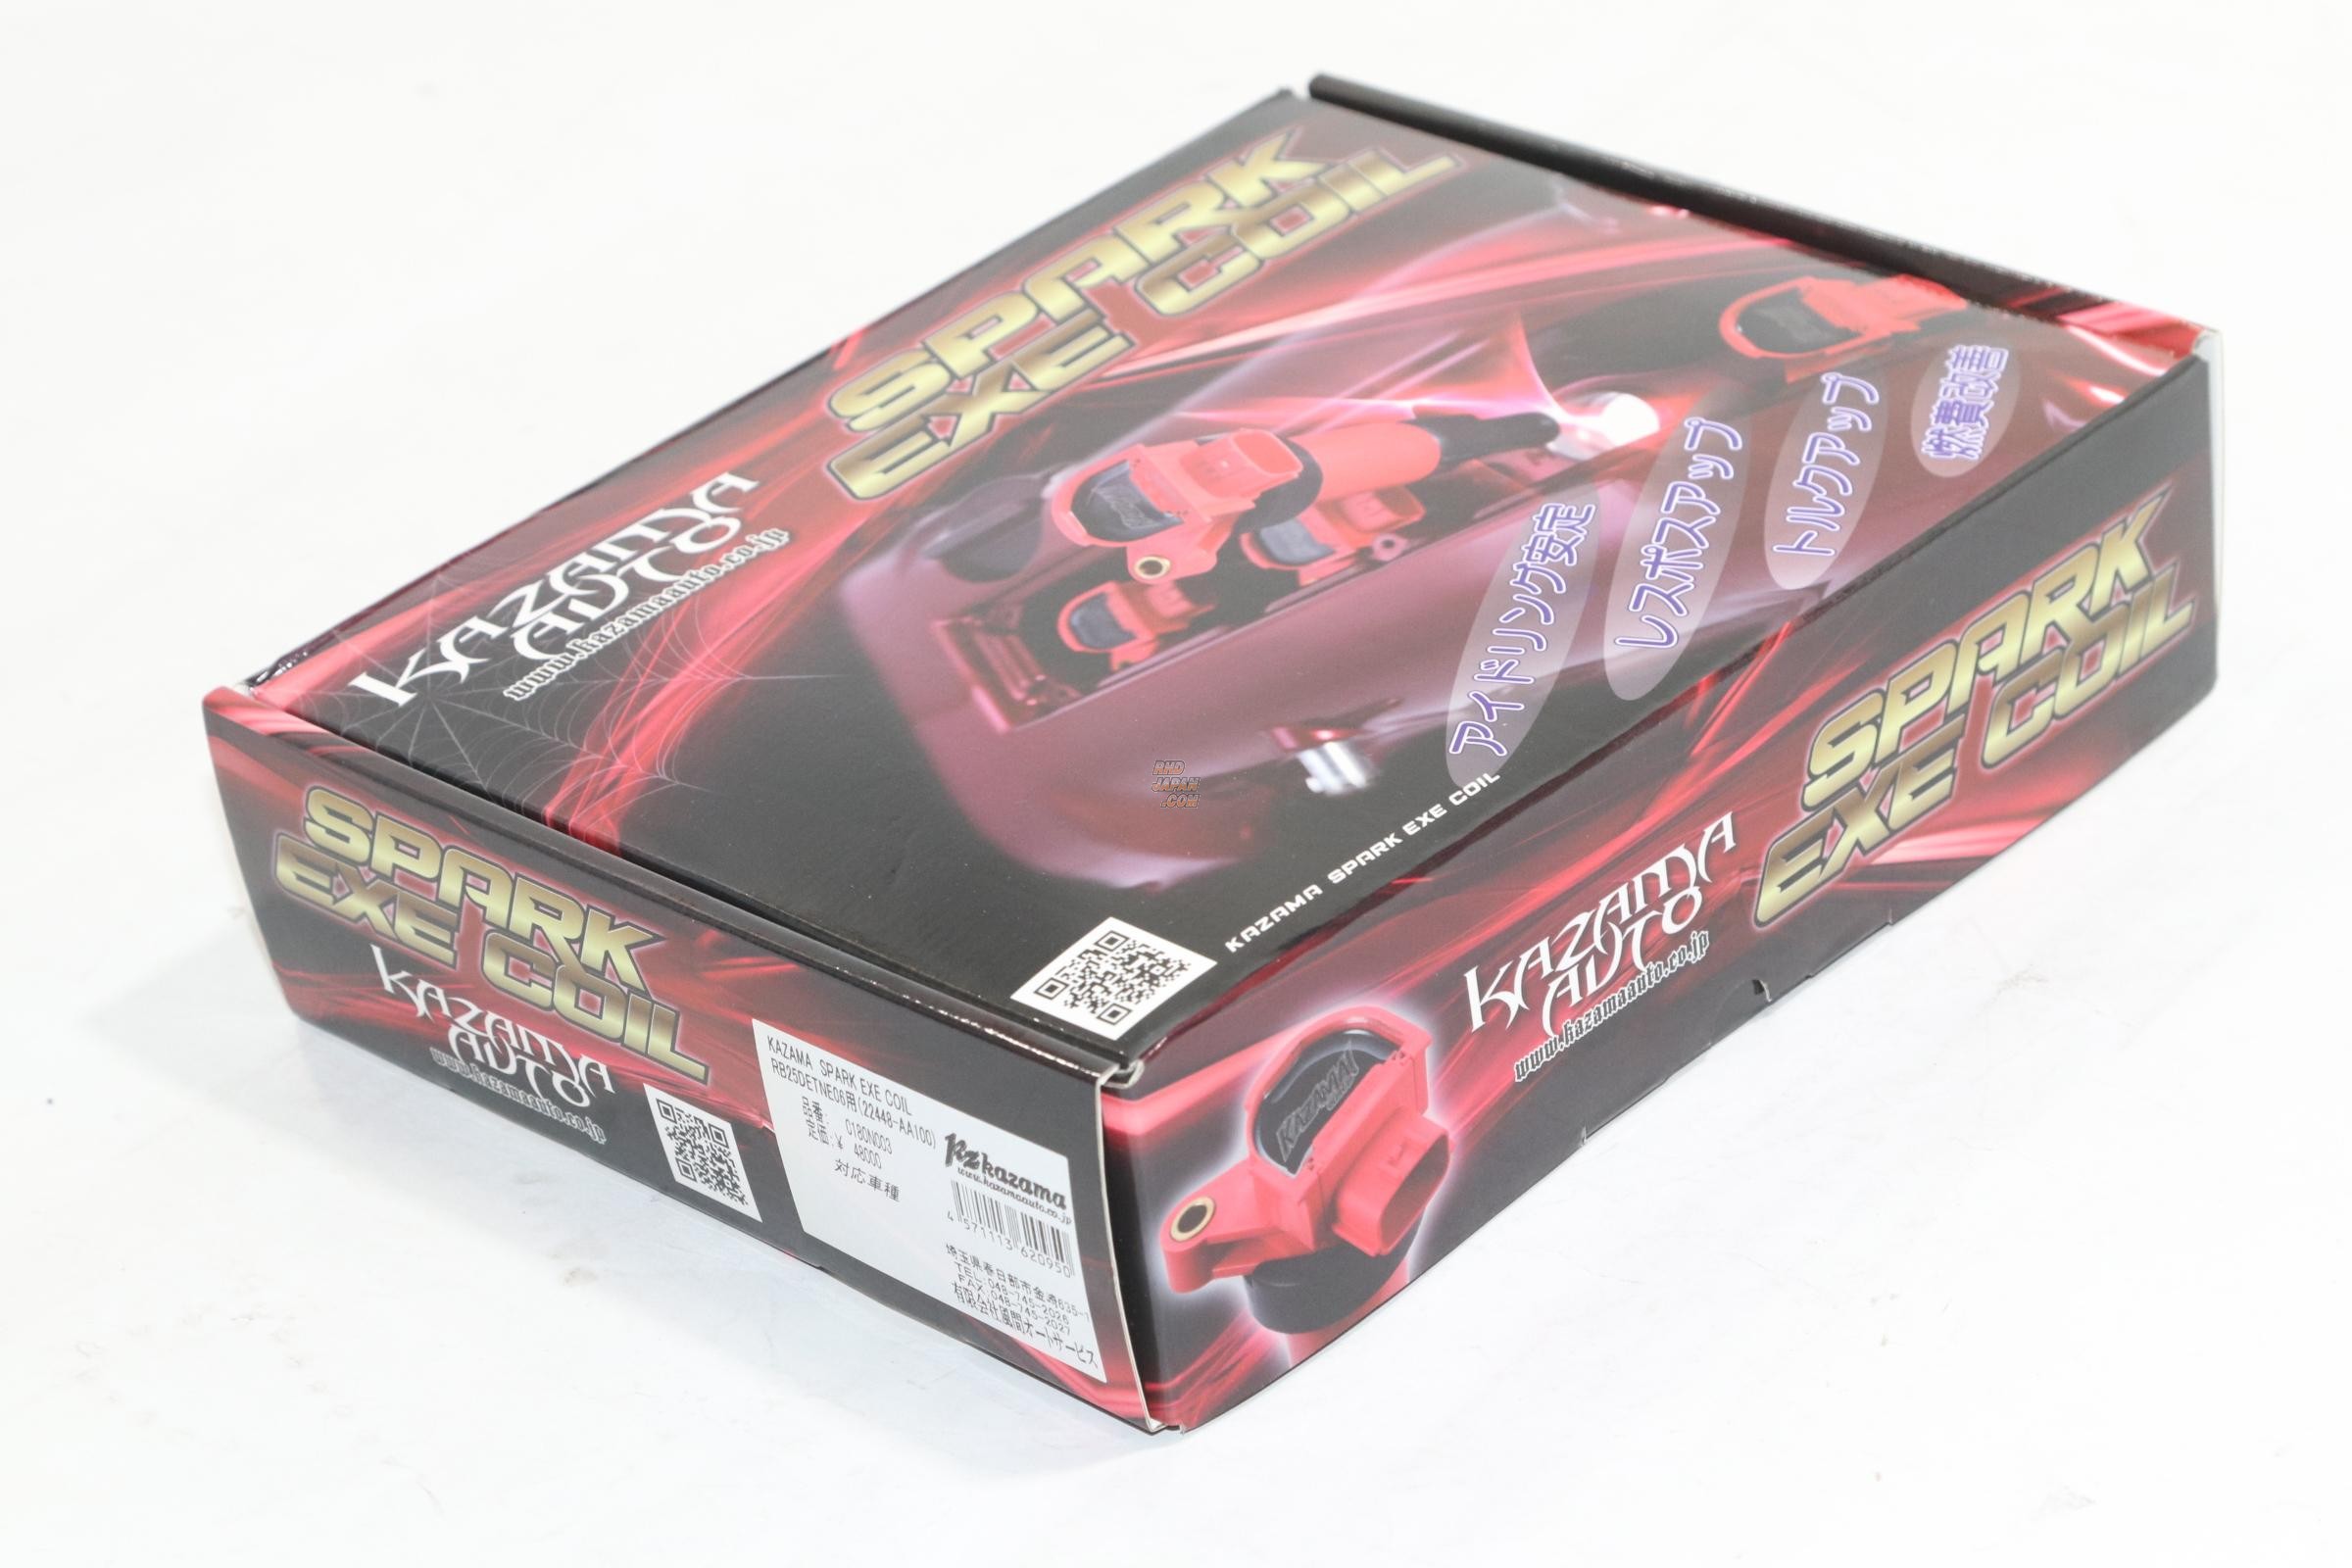 Kazama Auto Direct Ignition Coil Pack Set - S15 Turbo